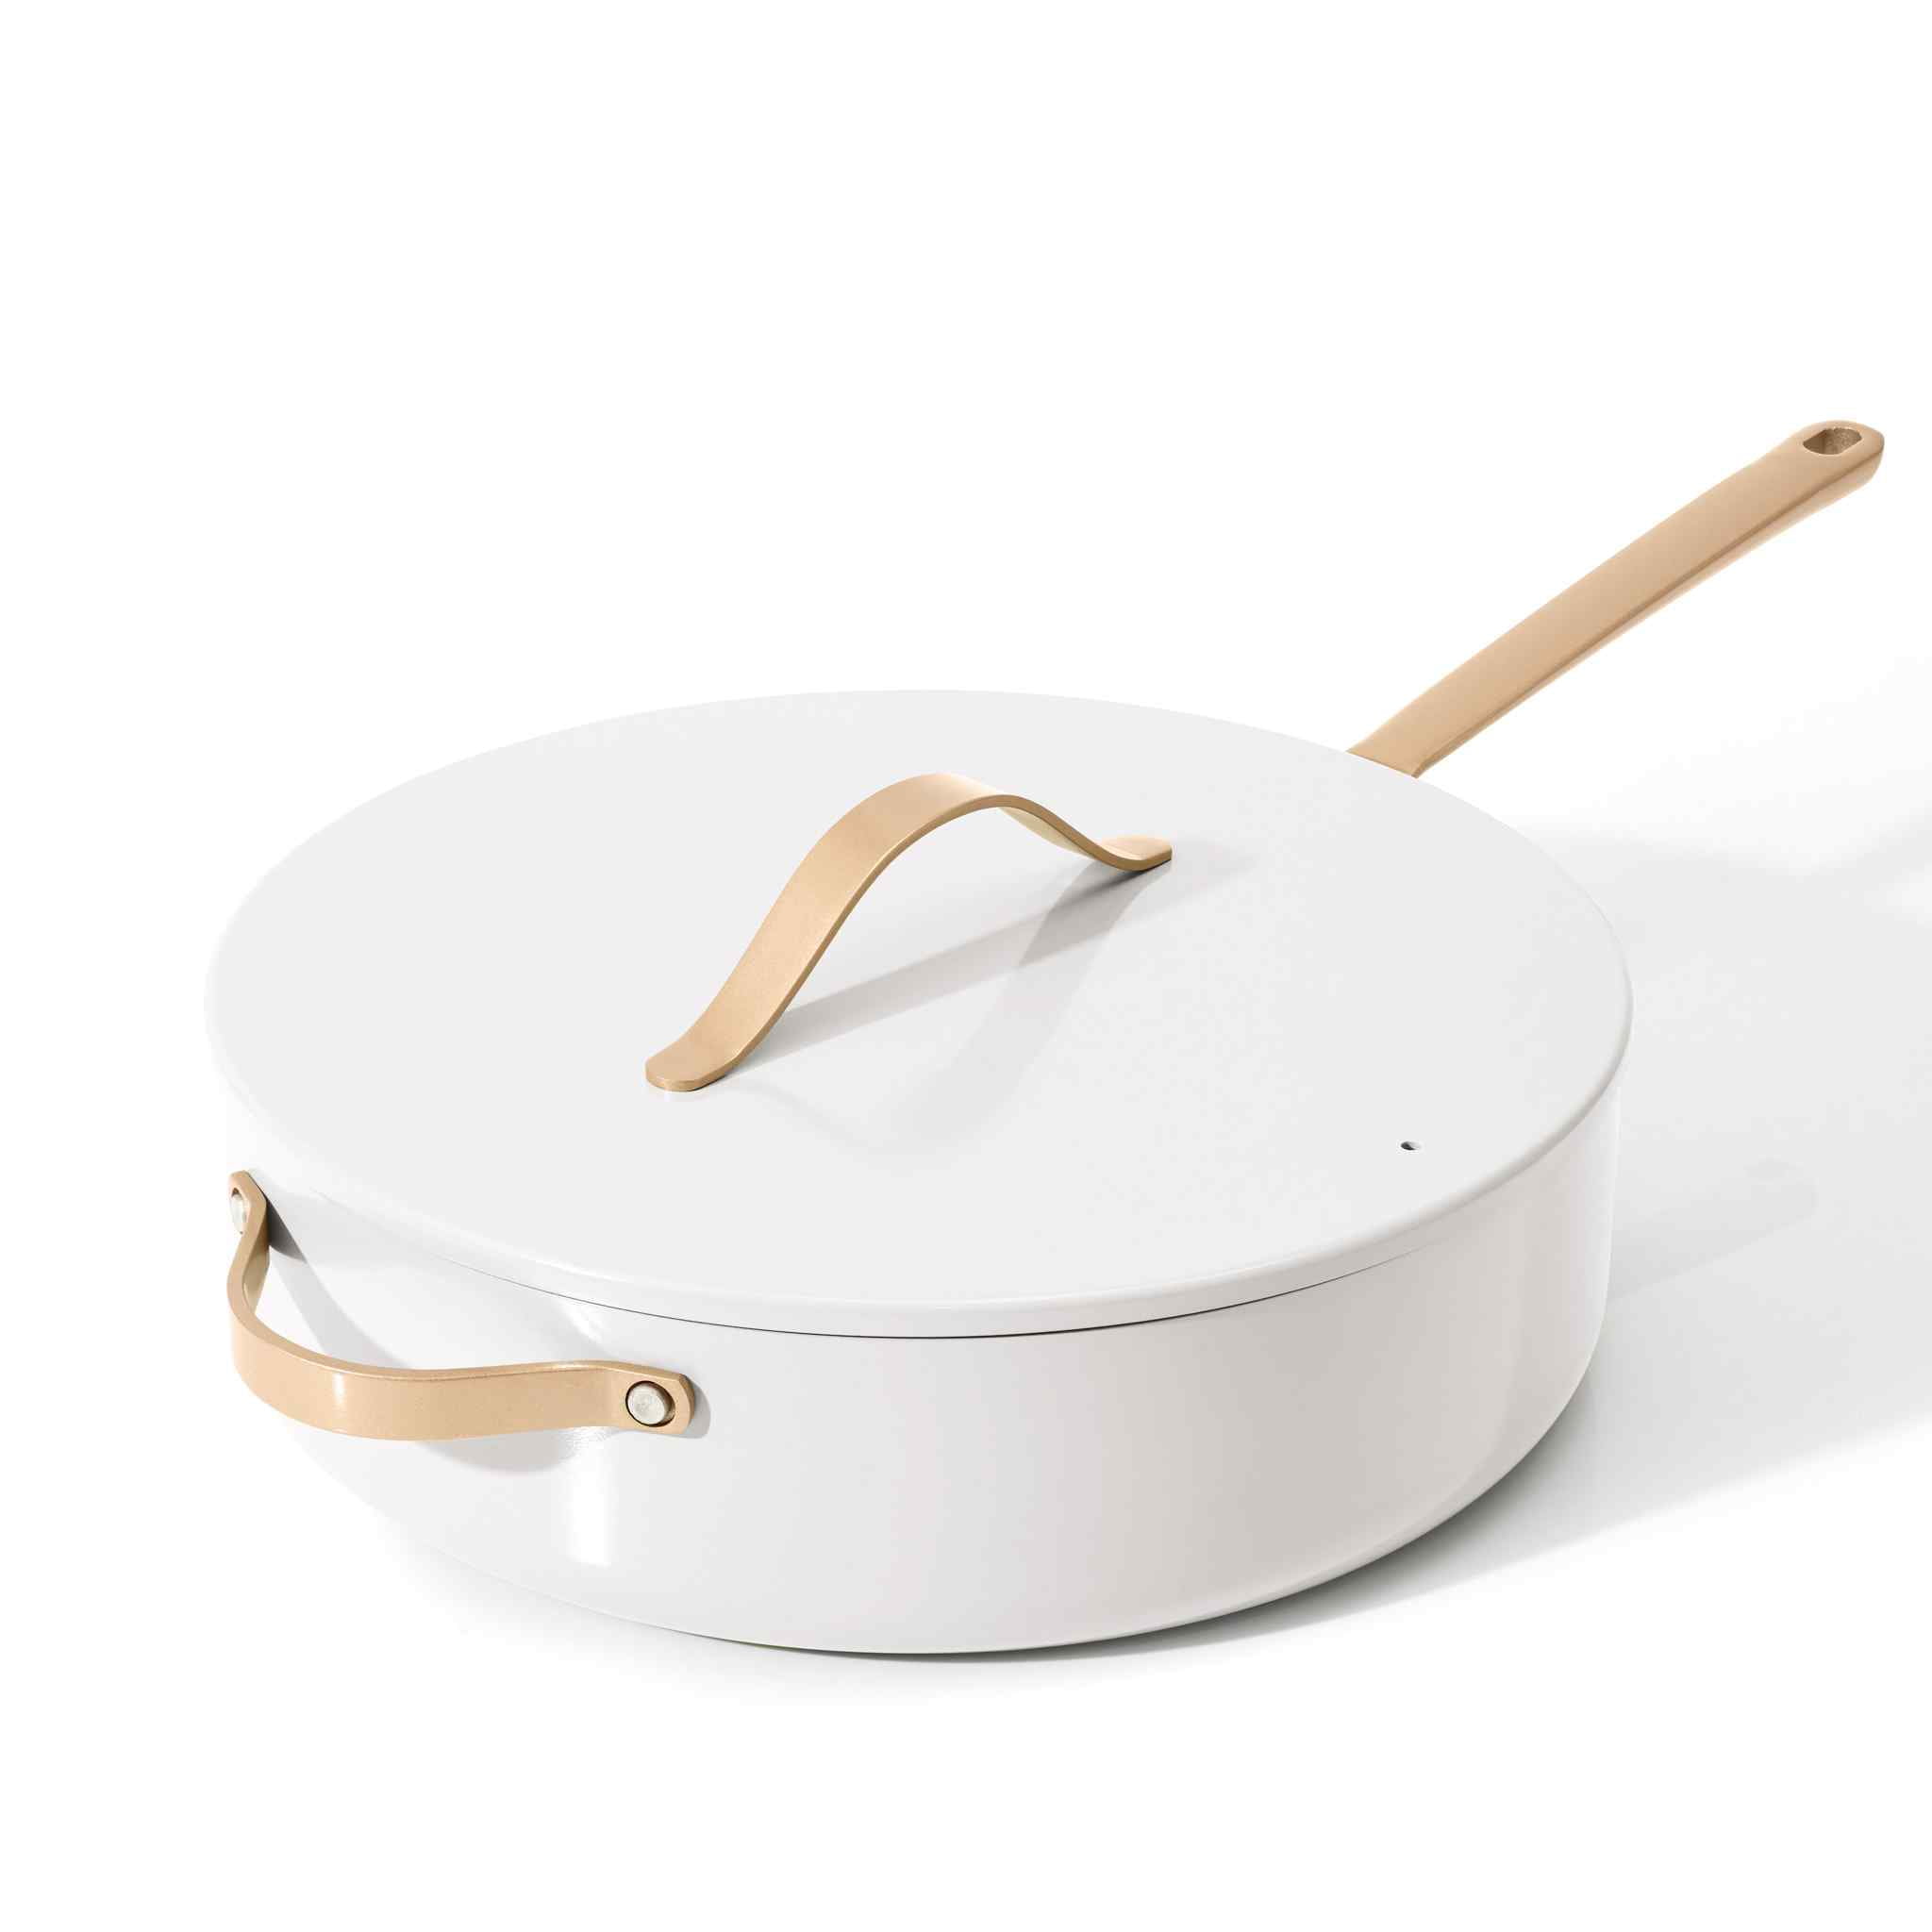 Beautiful 5.5 Quart Ceramic Non-Stick Sauté Pan, White Icing by Drew Barrymore - Walmart.com